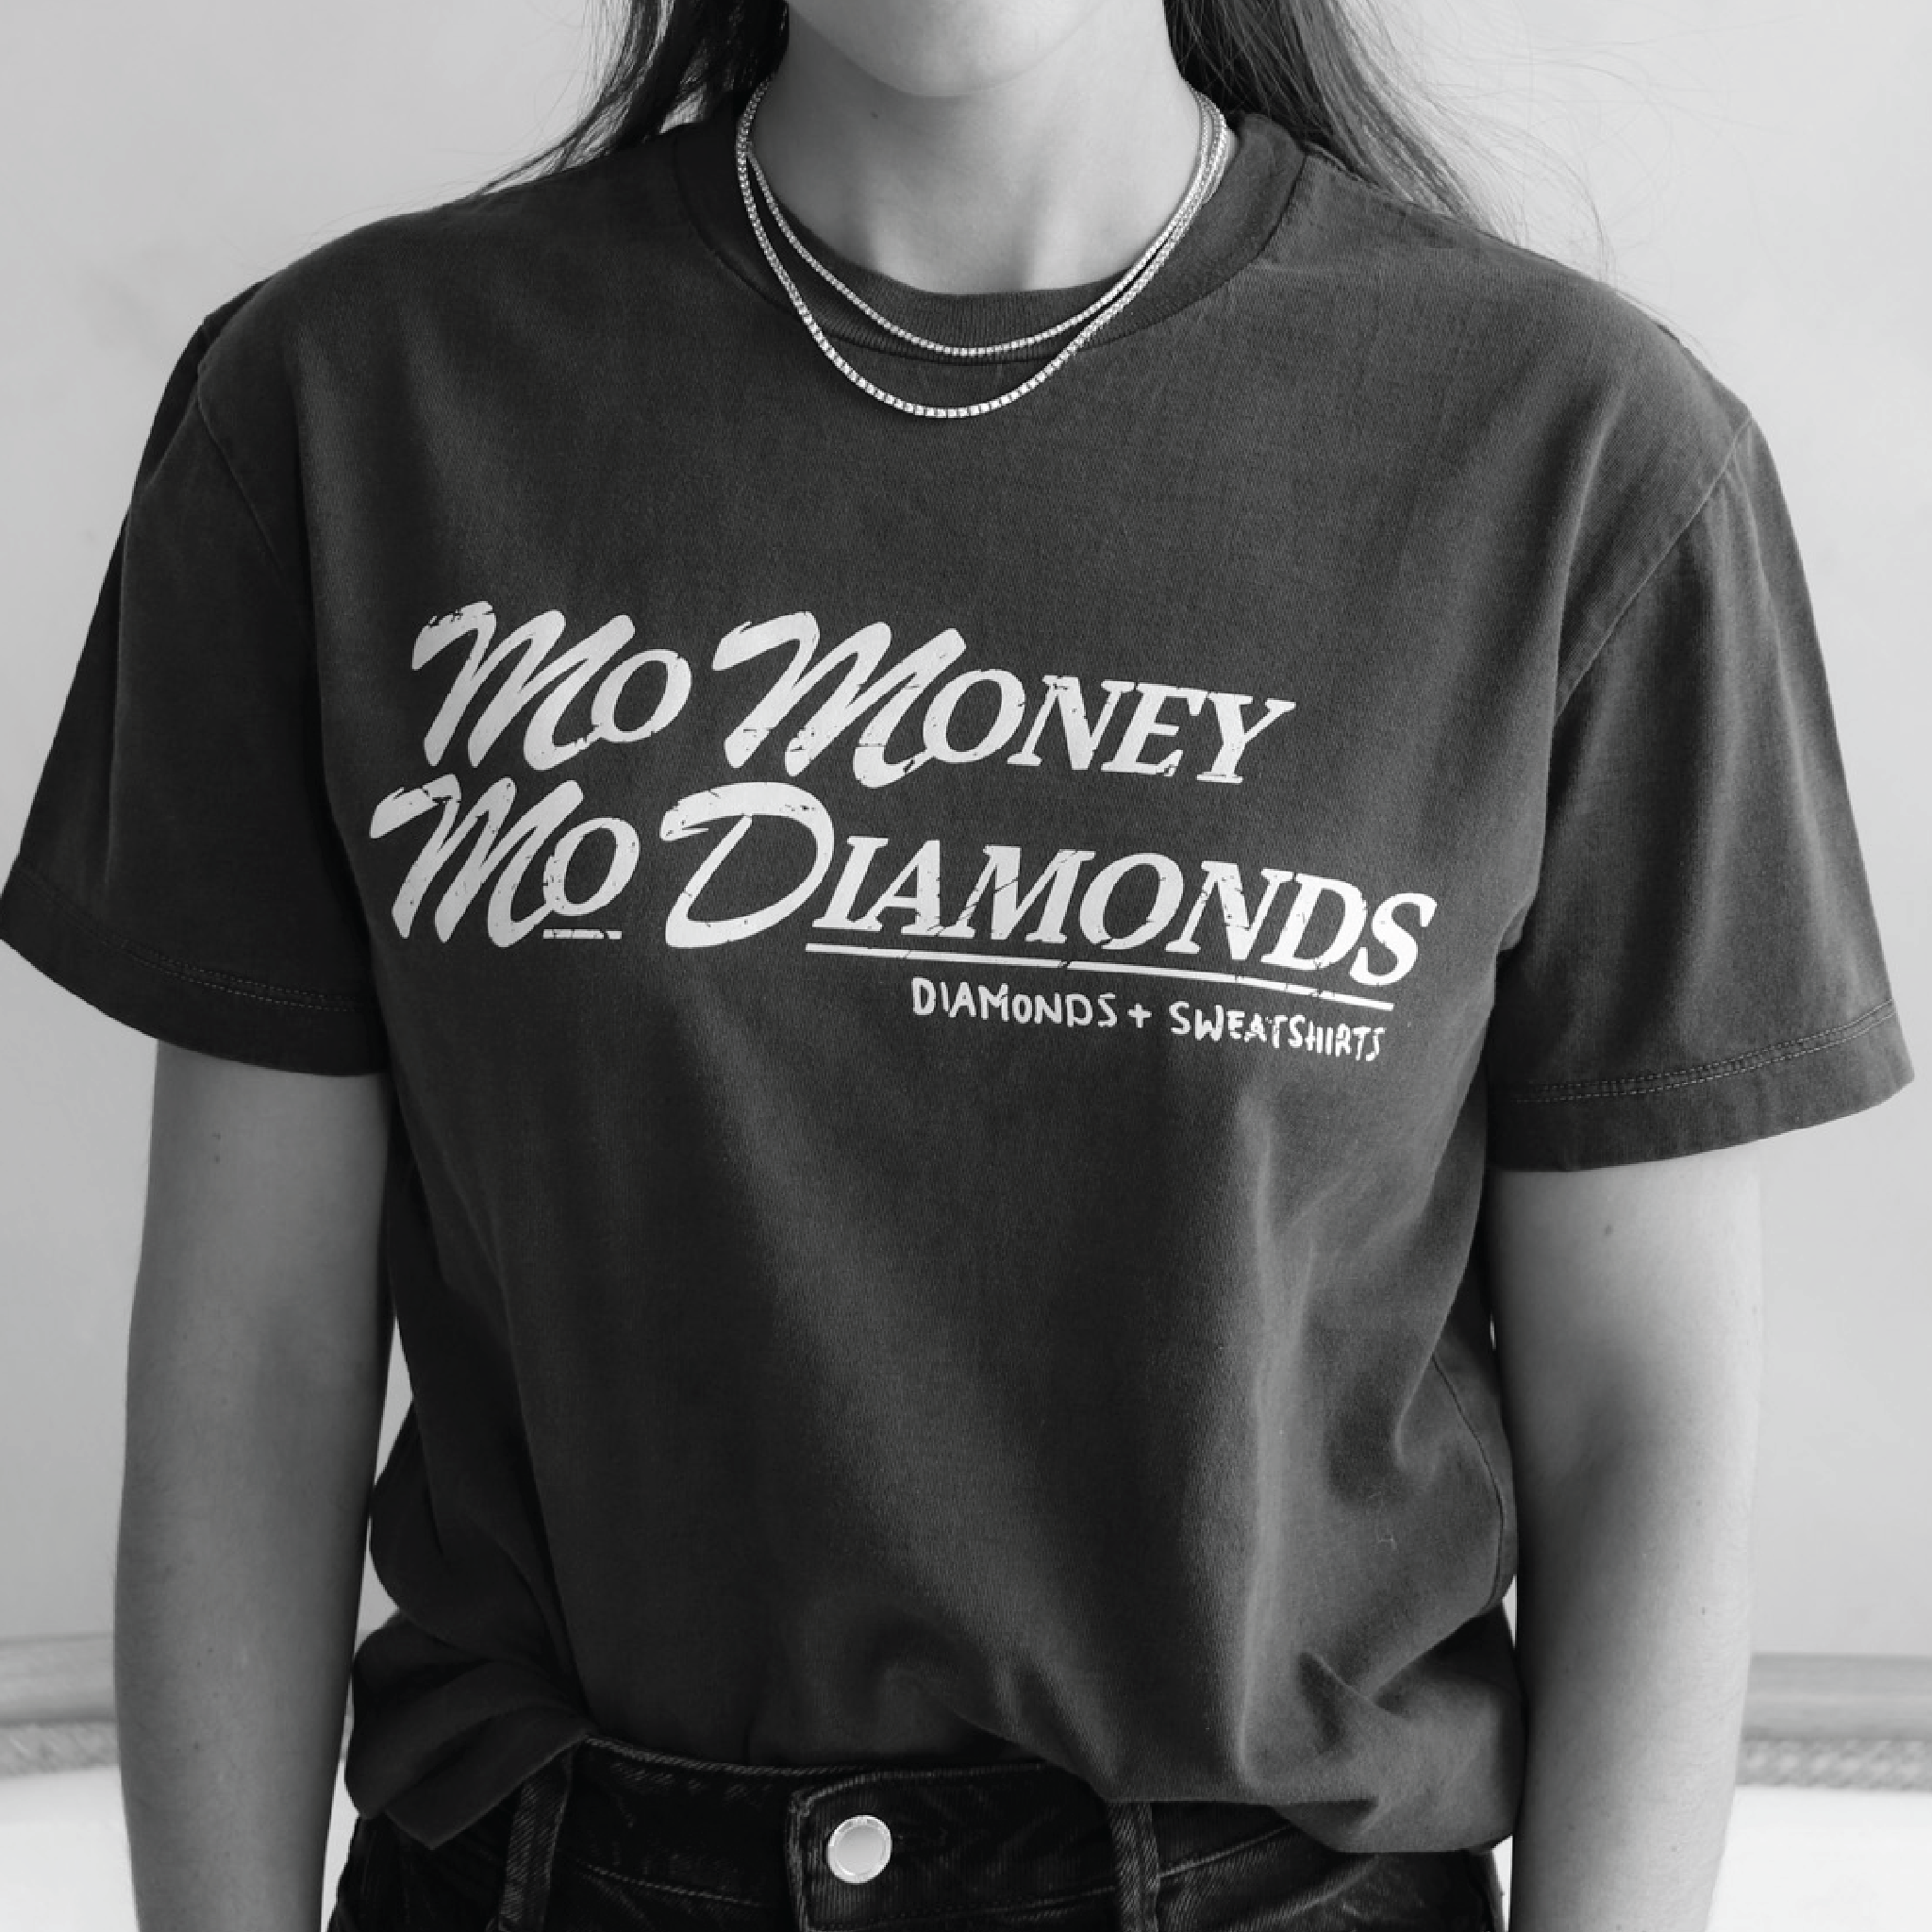 MO MONEY, MO DIAMONDS t-shirt